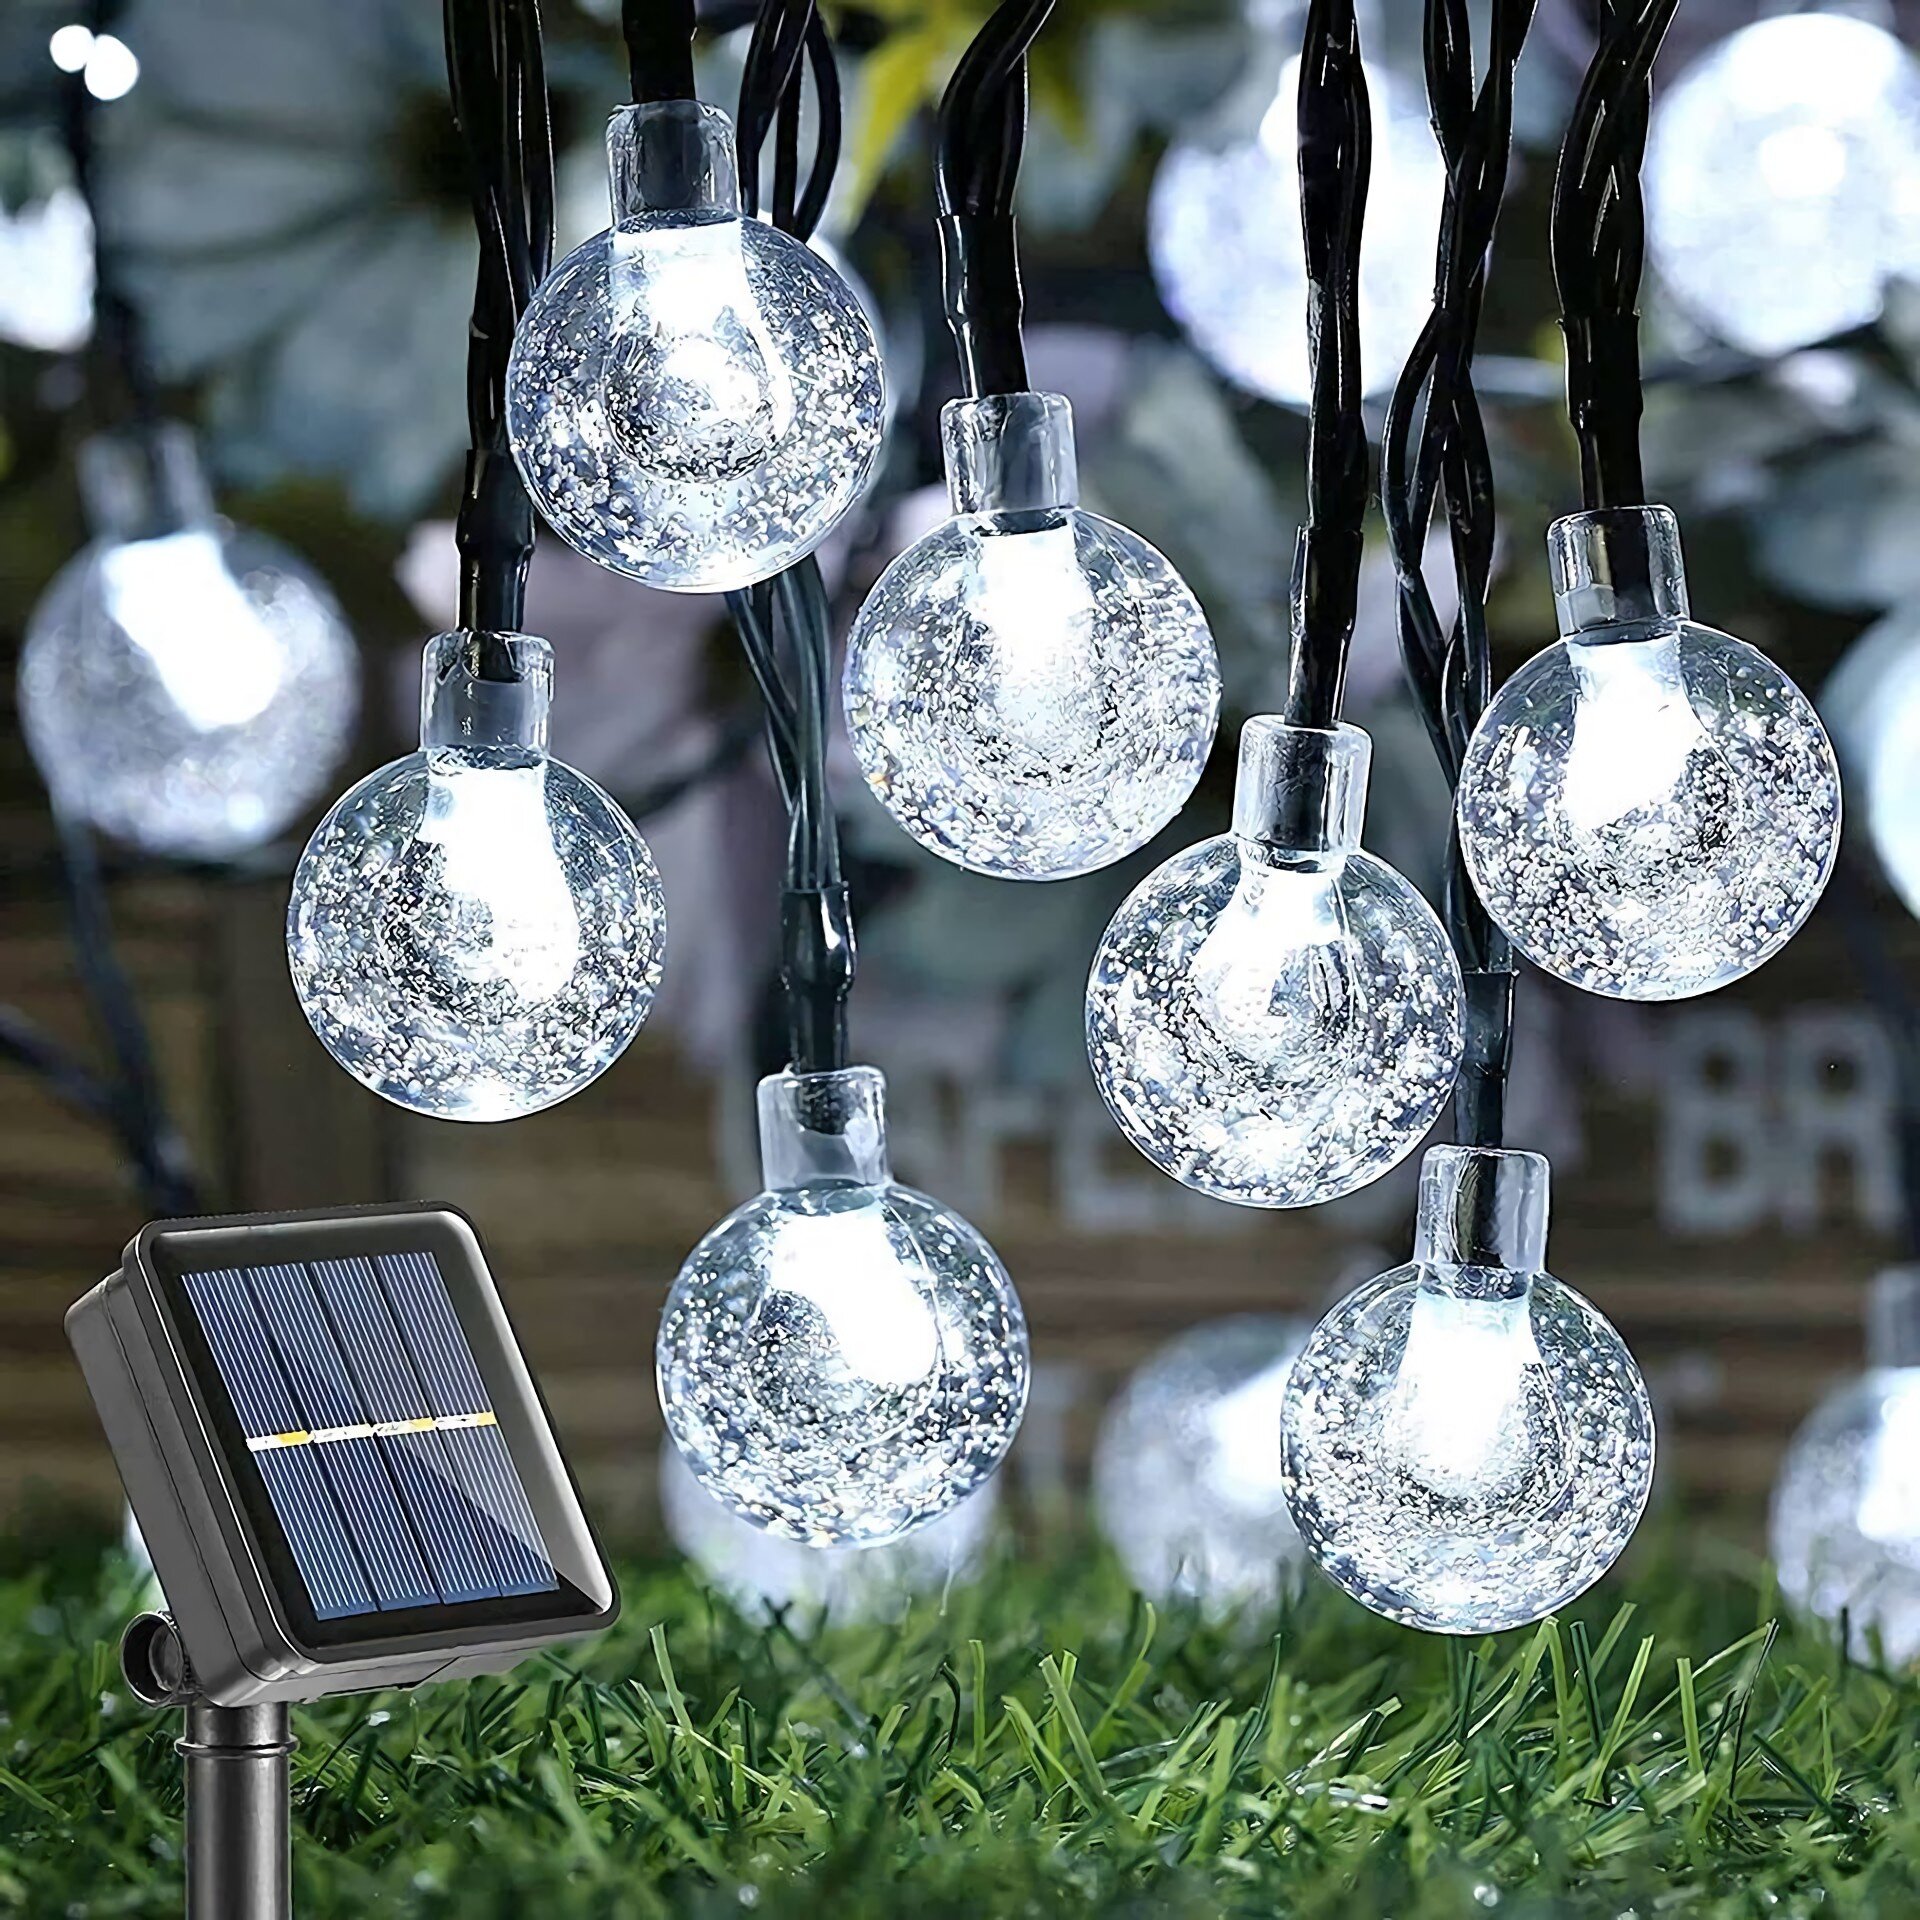 200 LED Solar Power Fairy Lights String Lamps Party Xmas Decor Garden Outdoor US 